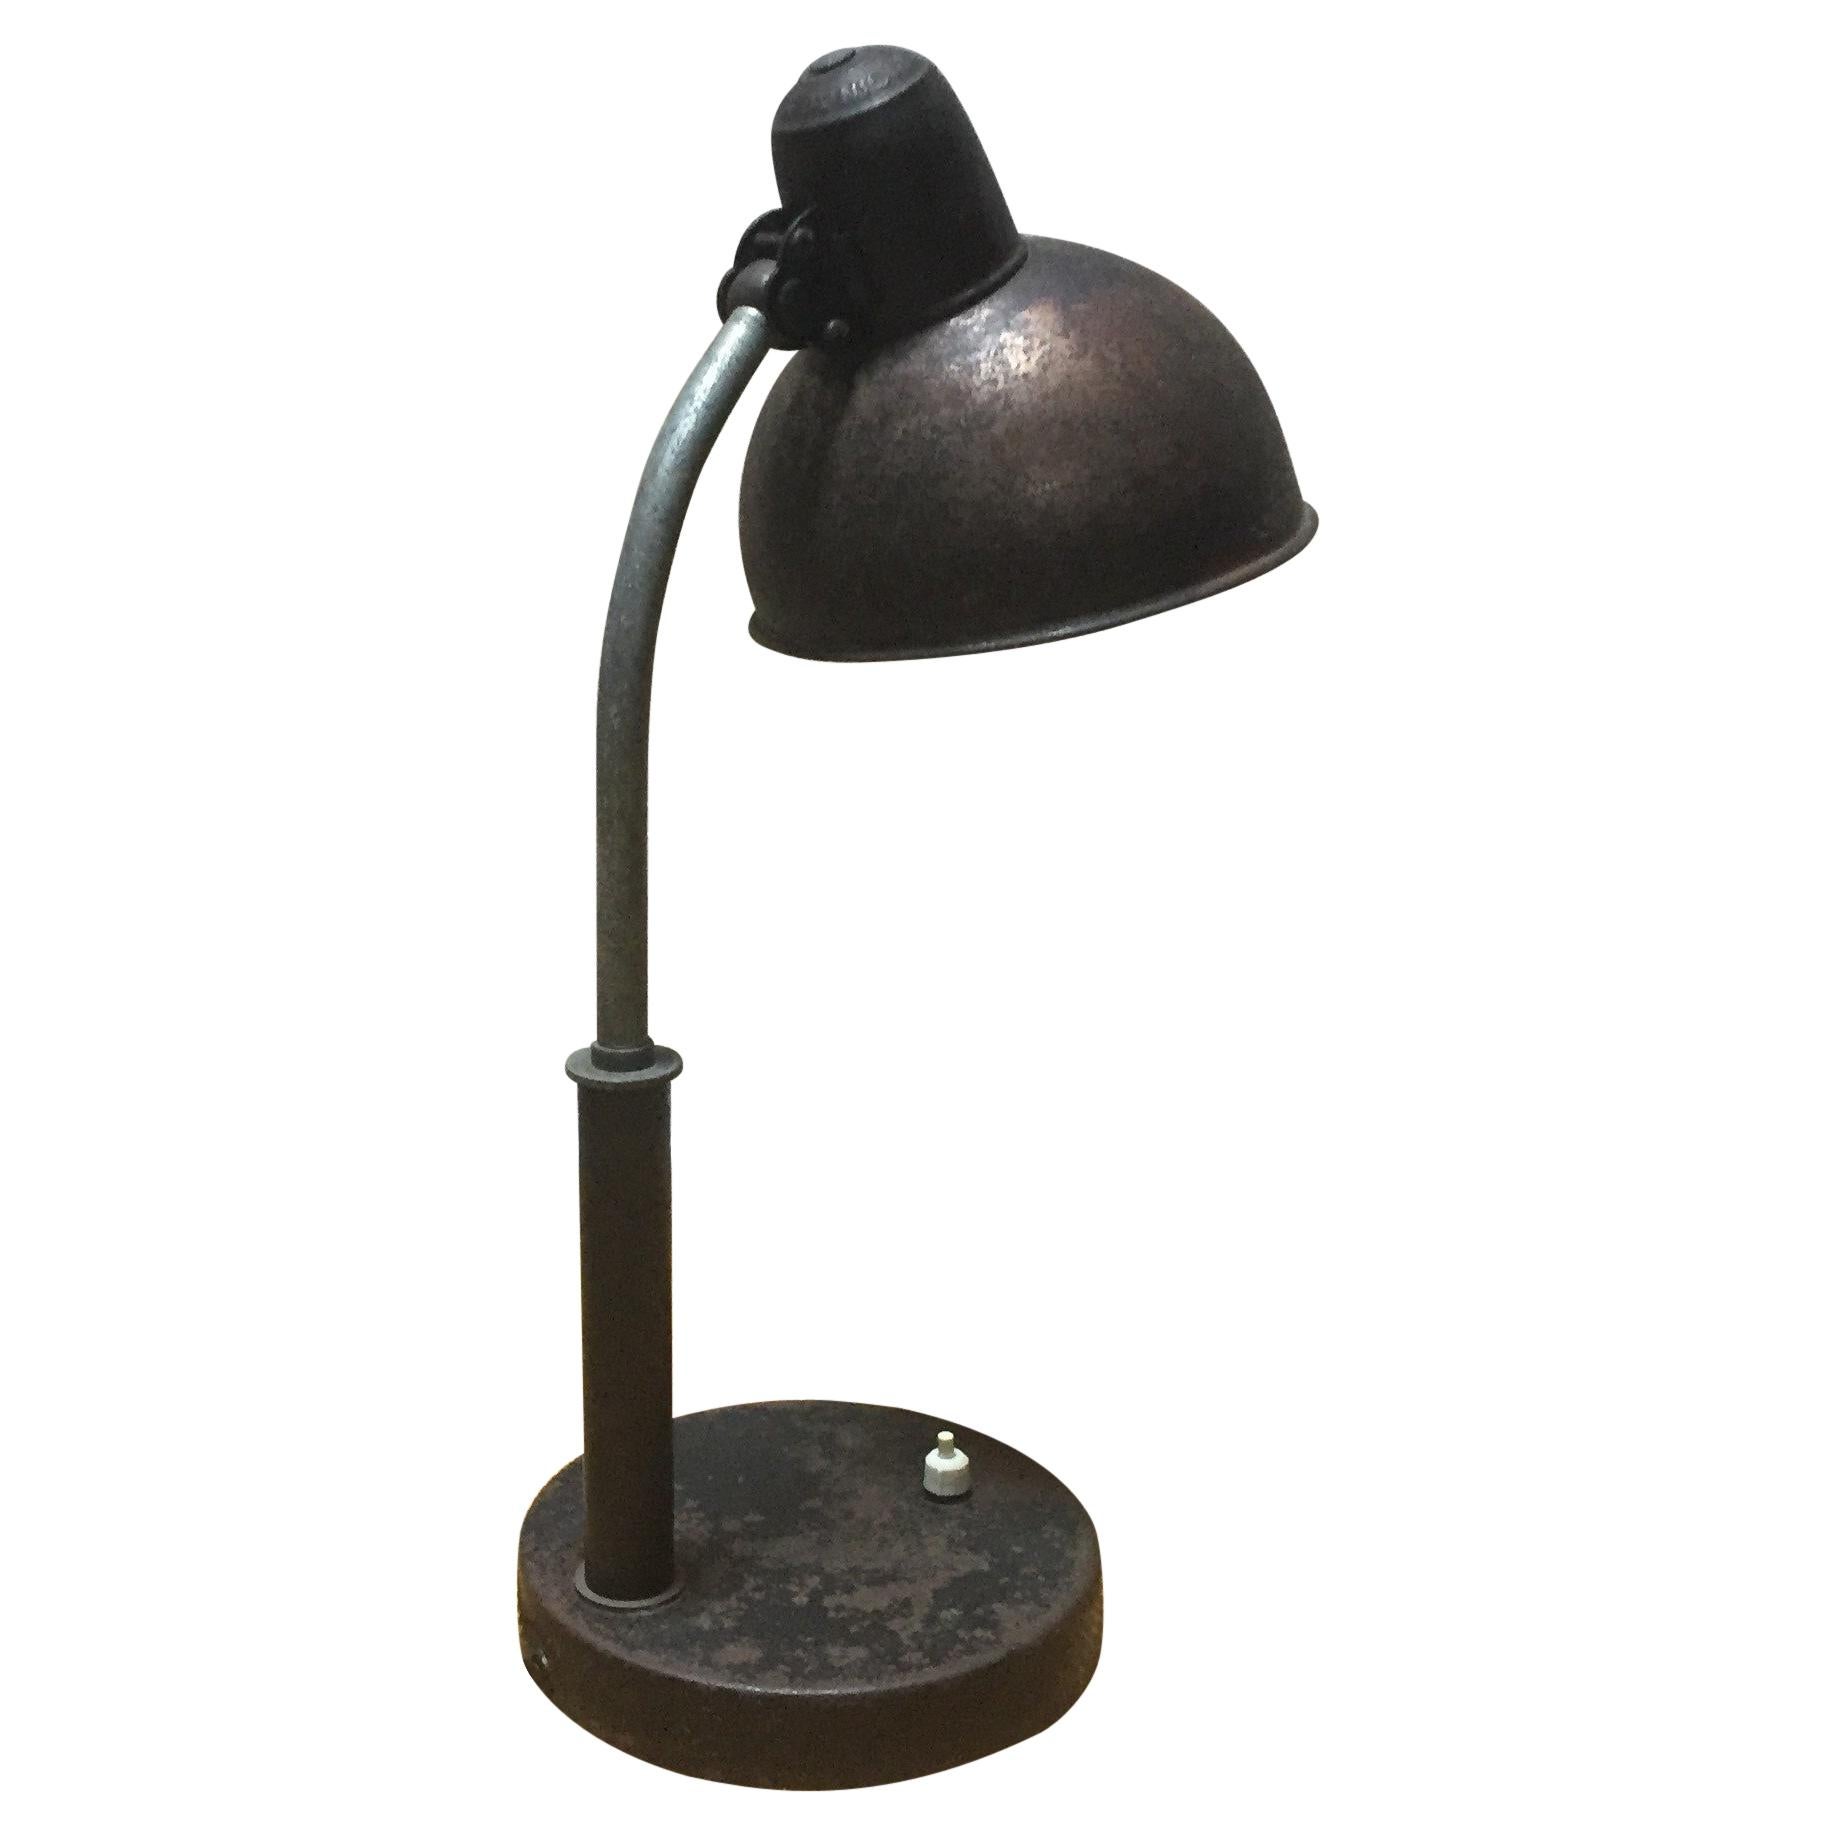 Christian Dell Original Black Metal Table Lamp by Idell Kaiser, 1930s Bauhaus For Sale